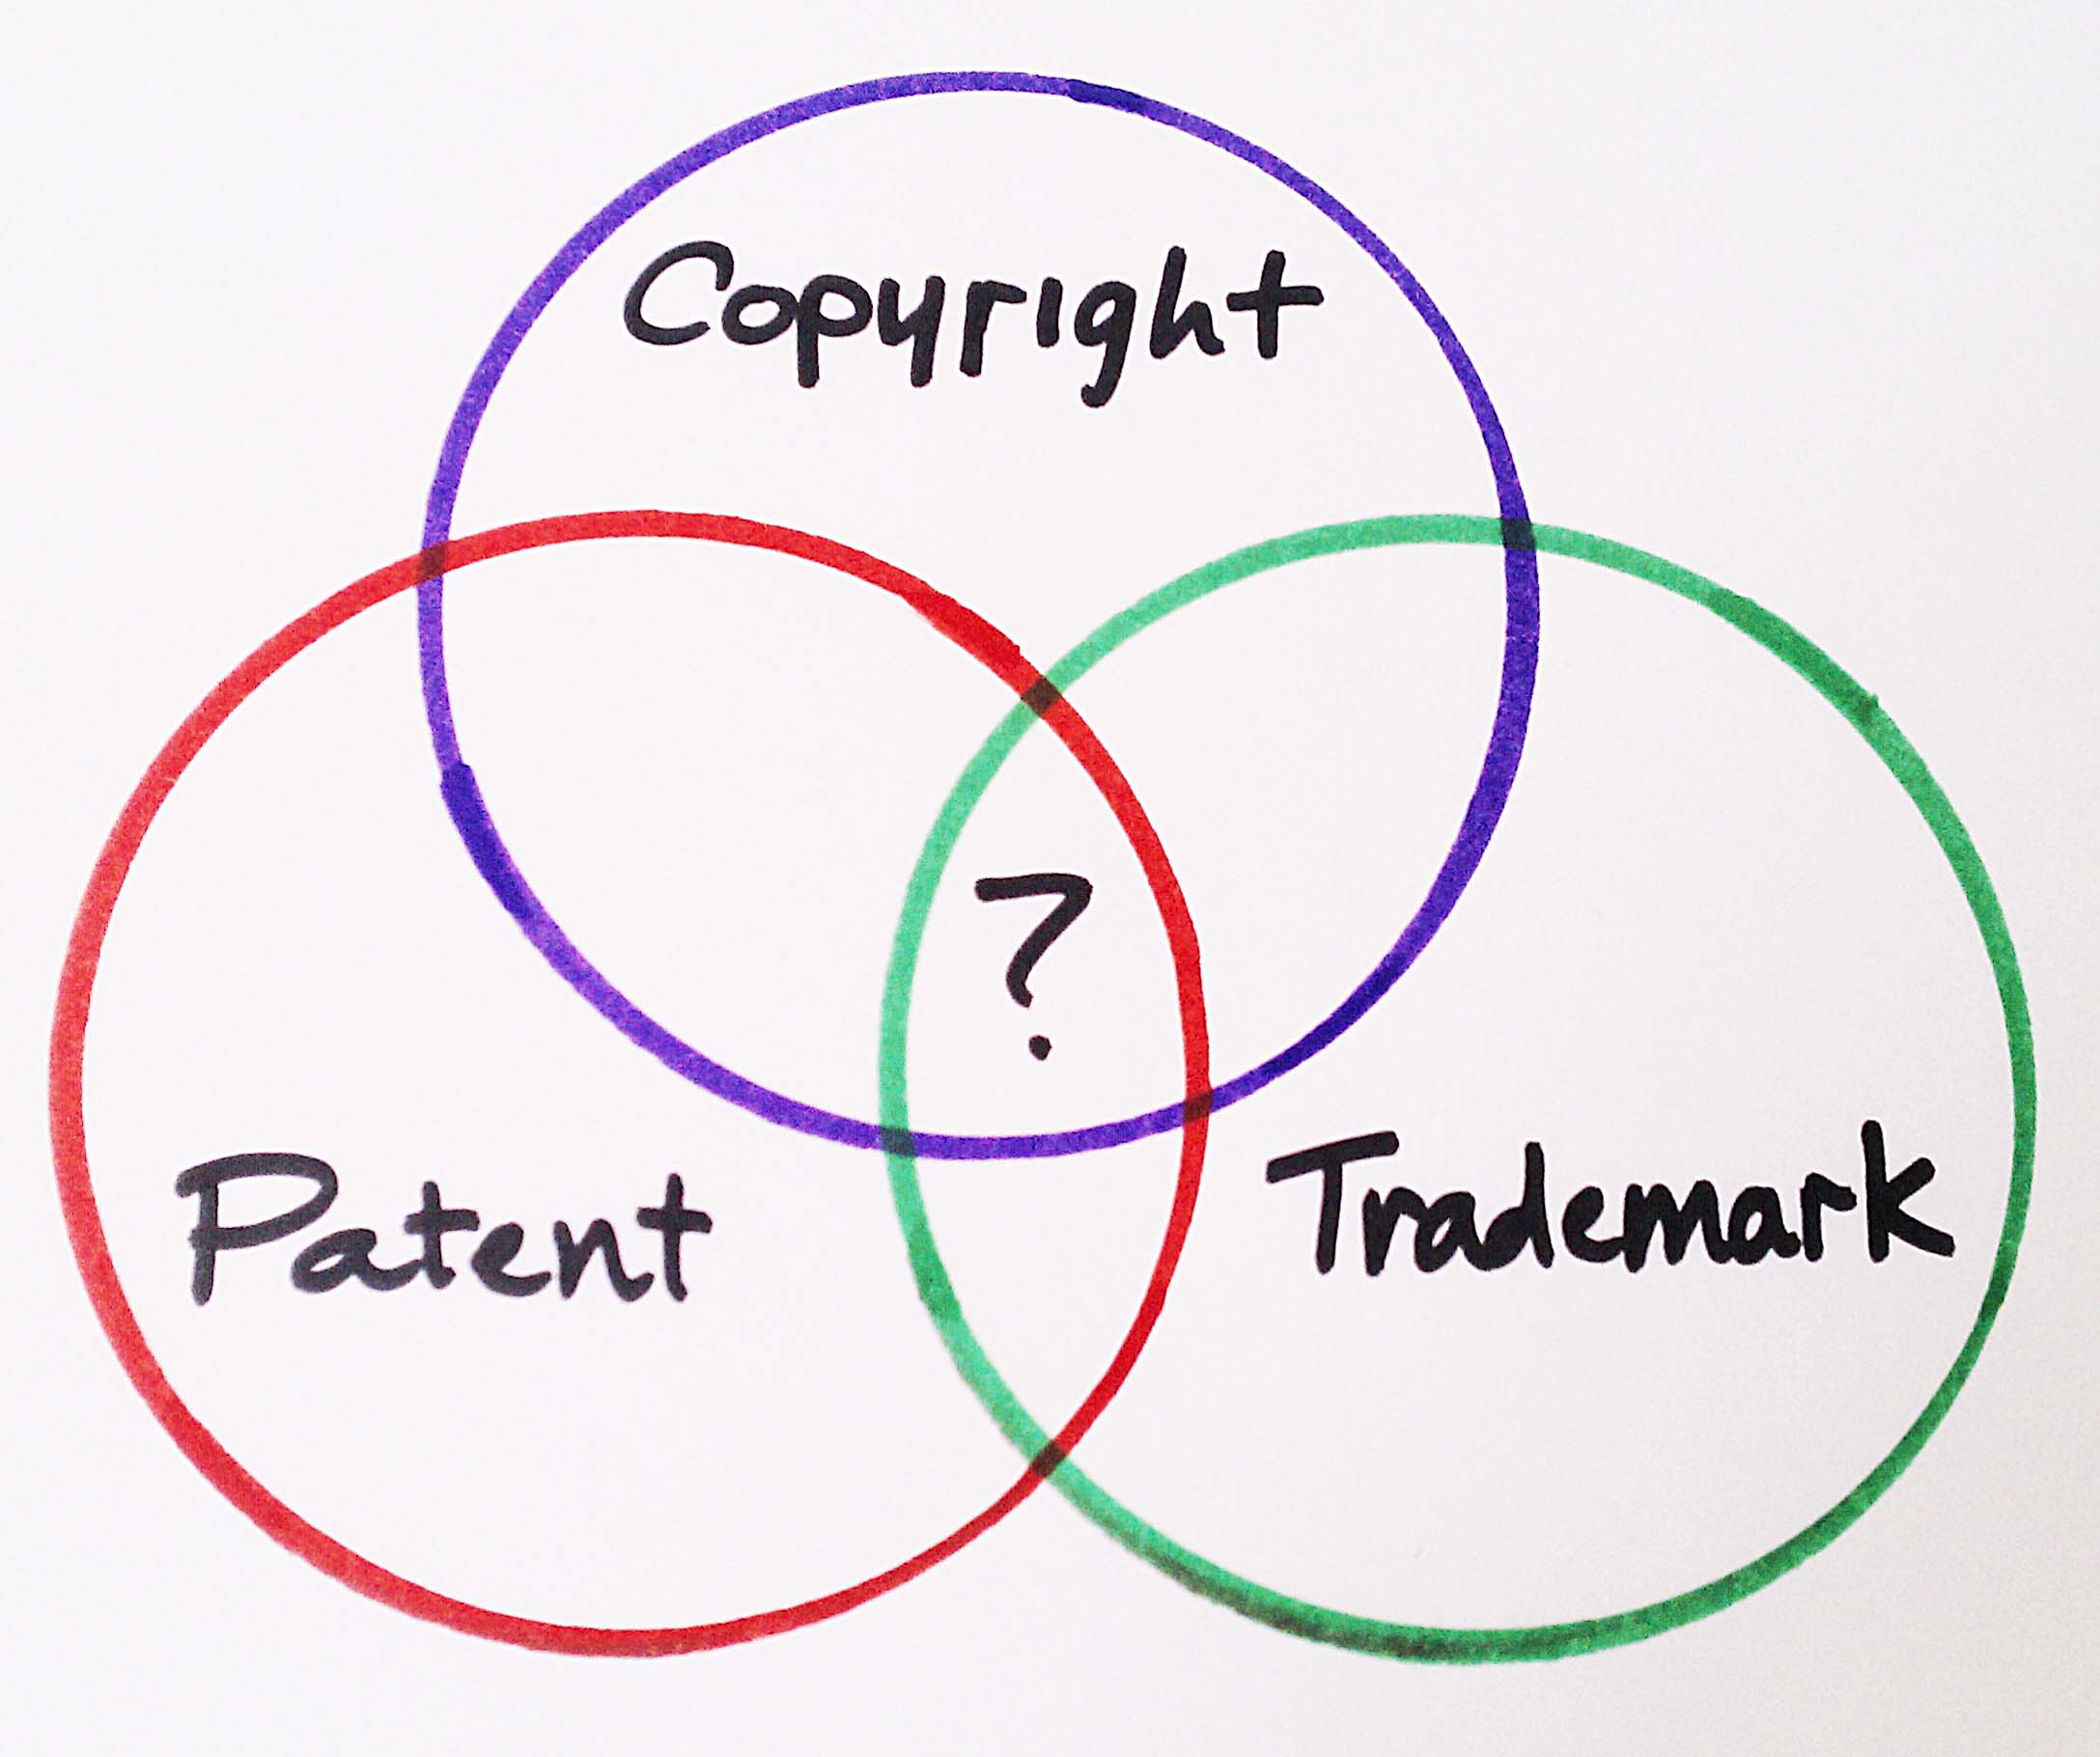 A Venn diagram showing patent versus trademark versus copyright.